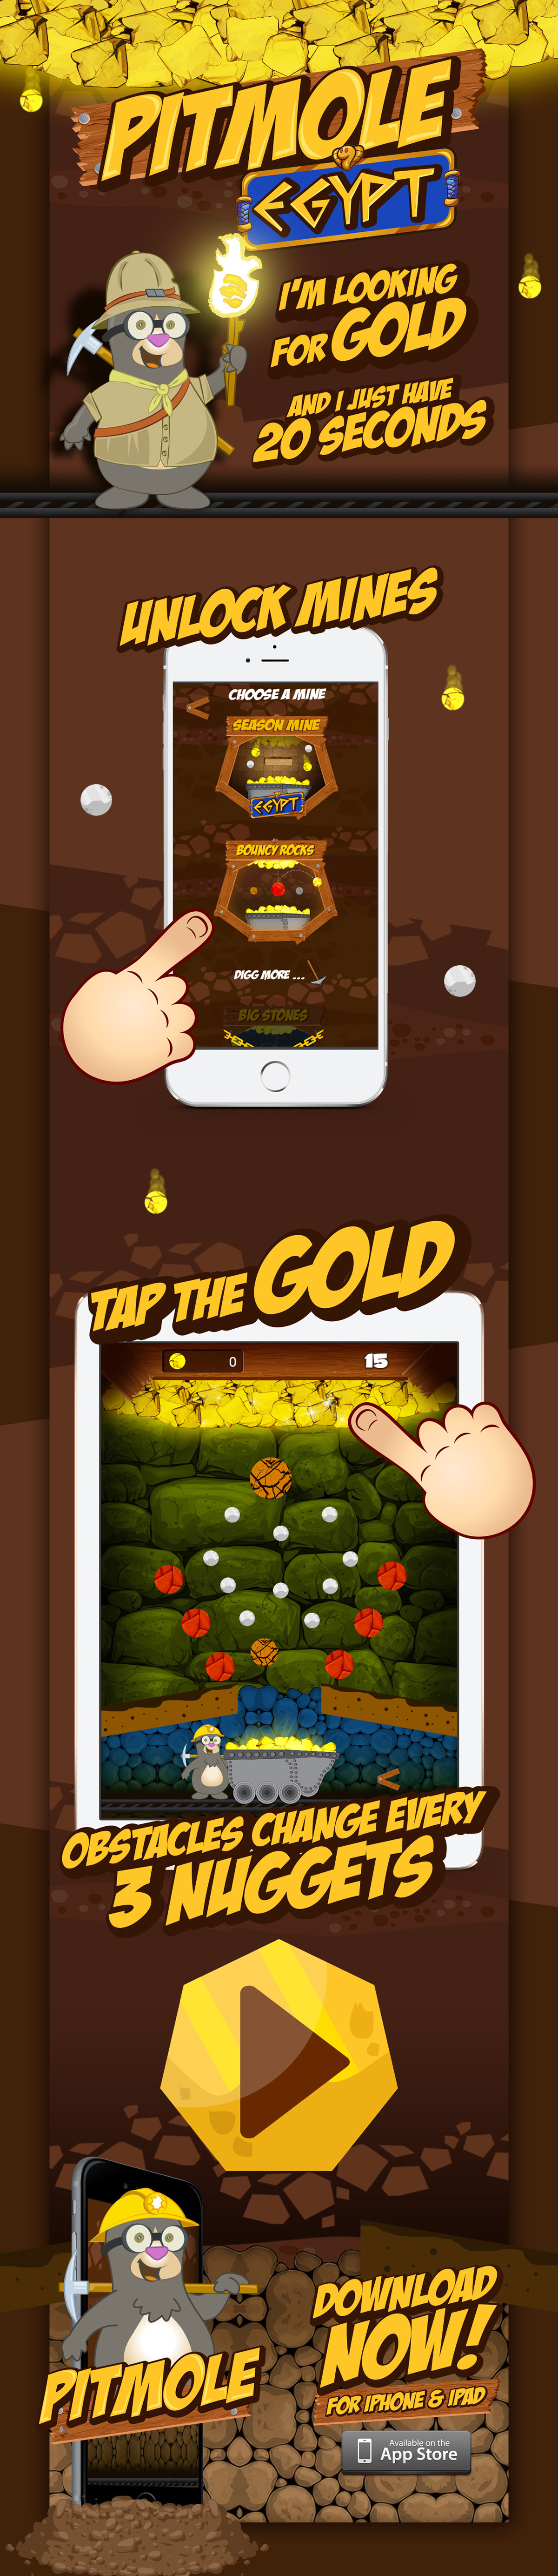 app appstore iphone iPad apple game pitmole Mole juego Character ilustracion